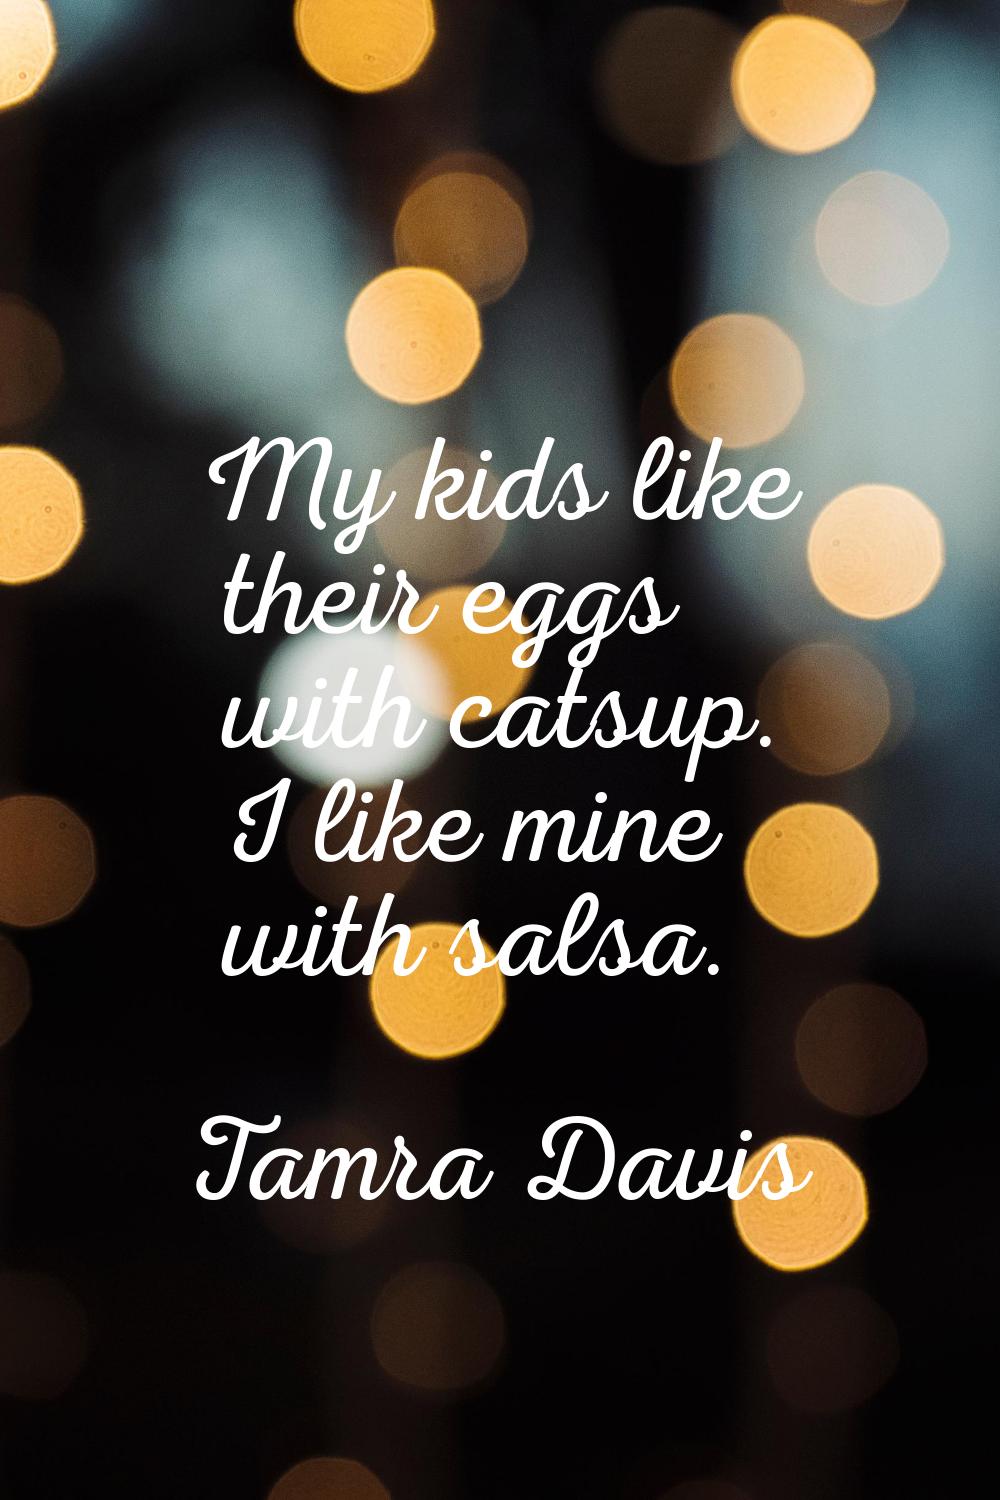 My kids like their eggs with catsup. I like mine with salsa.